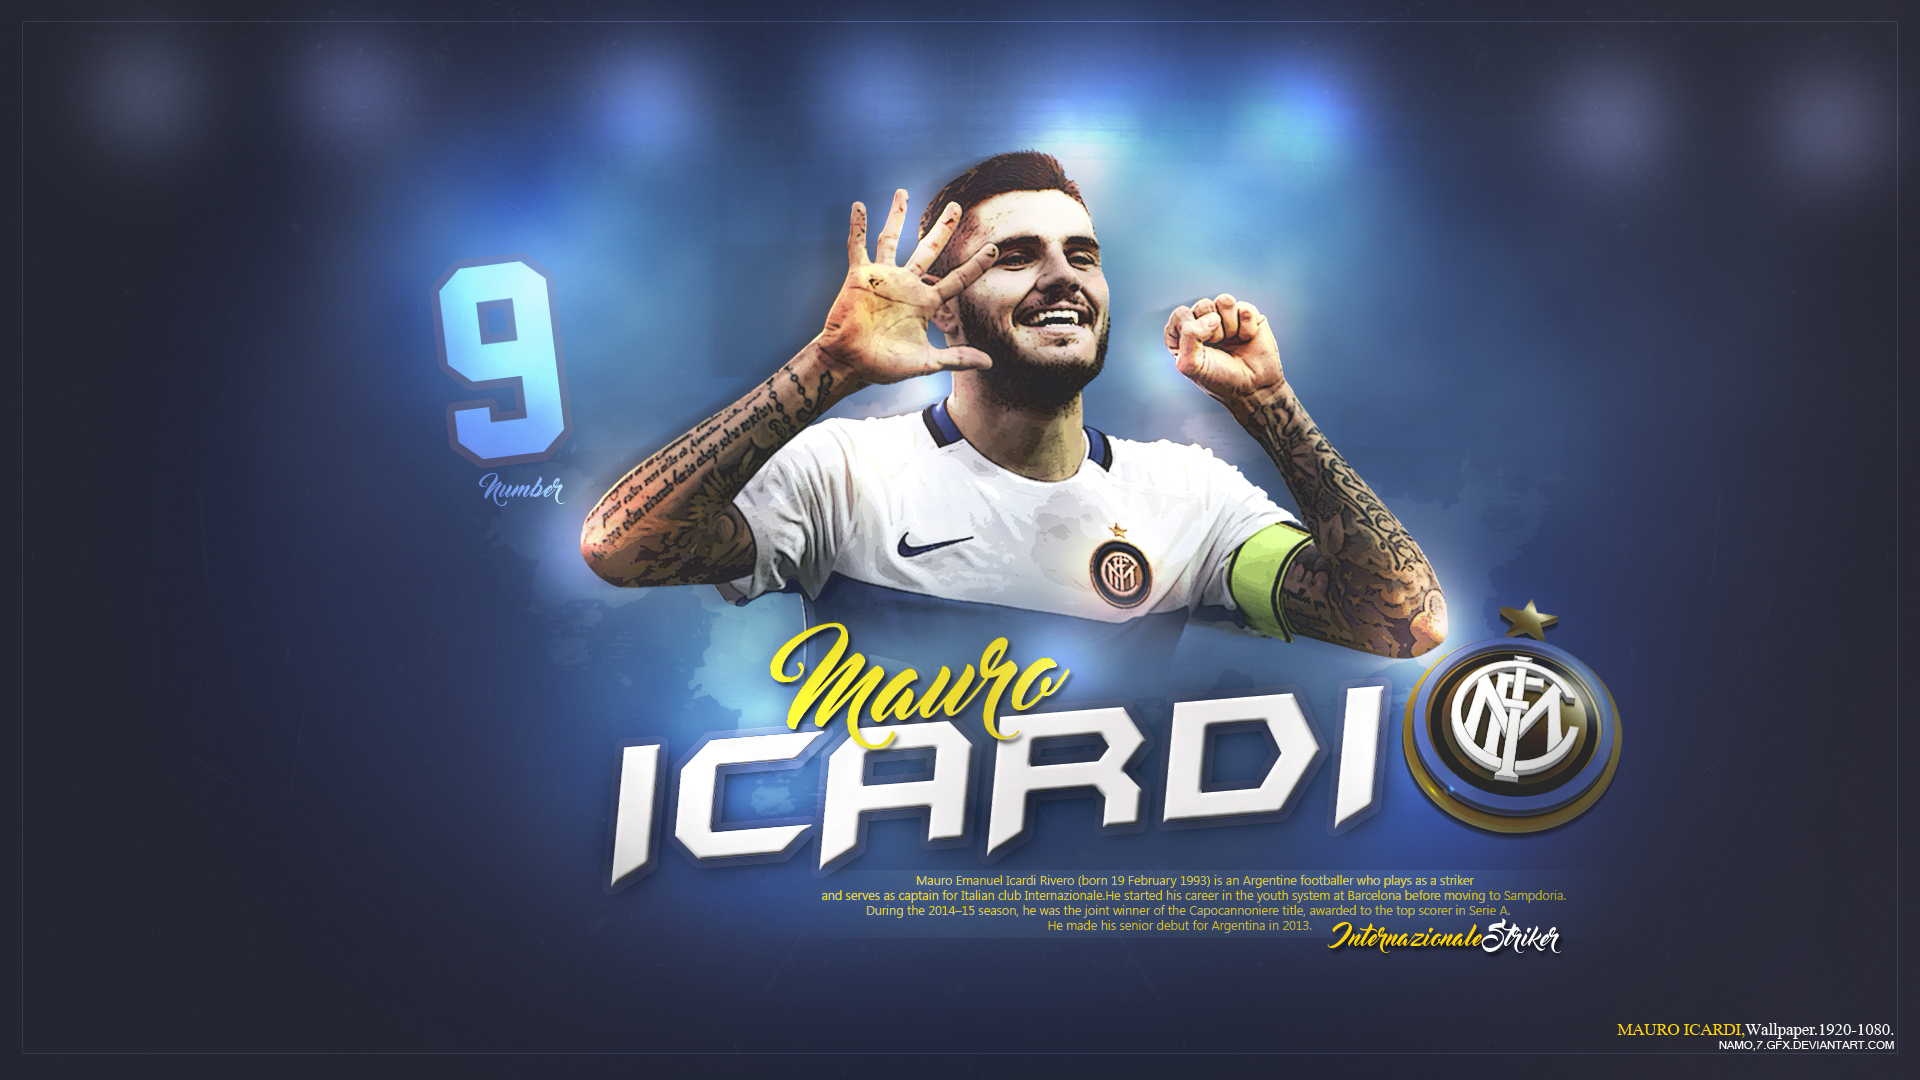 Mauro Icardi - Inter by Namik Amirov